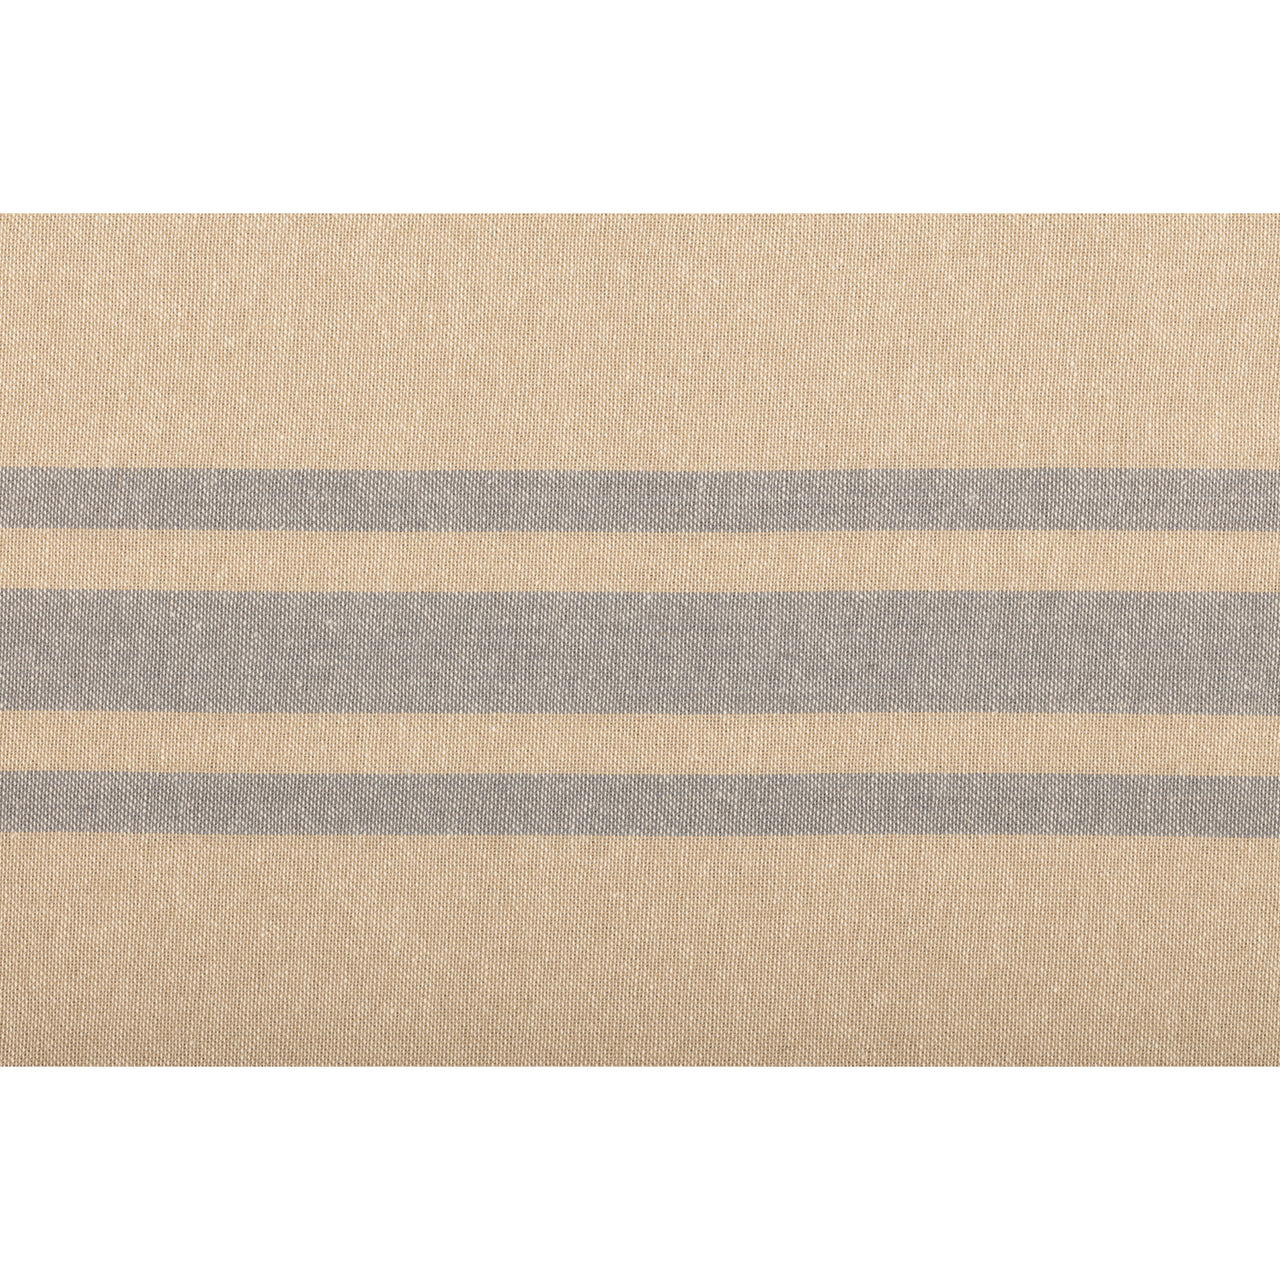 Farmer's Market Grain Sack Stripe Fabric Euro Sham Set of 2 26x26 VHC Brands